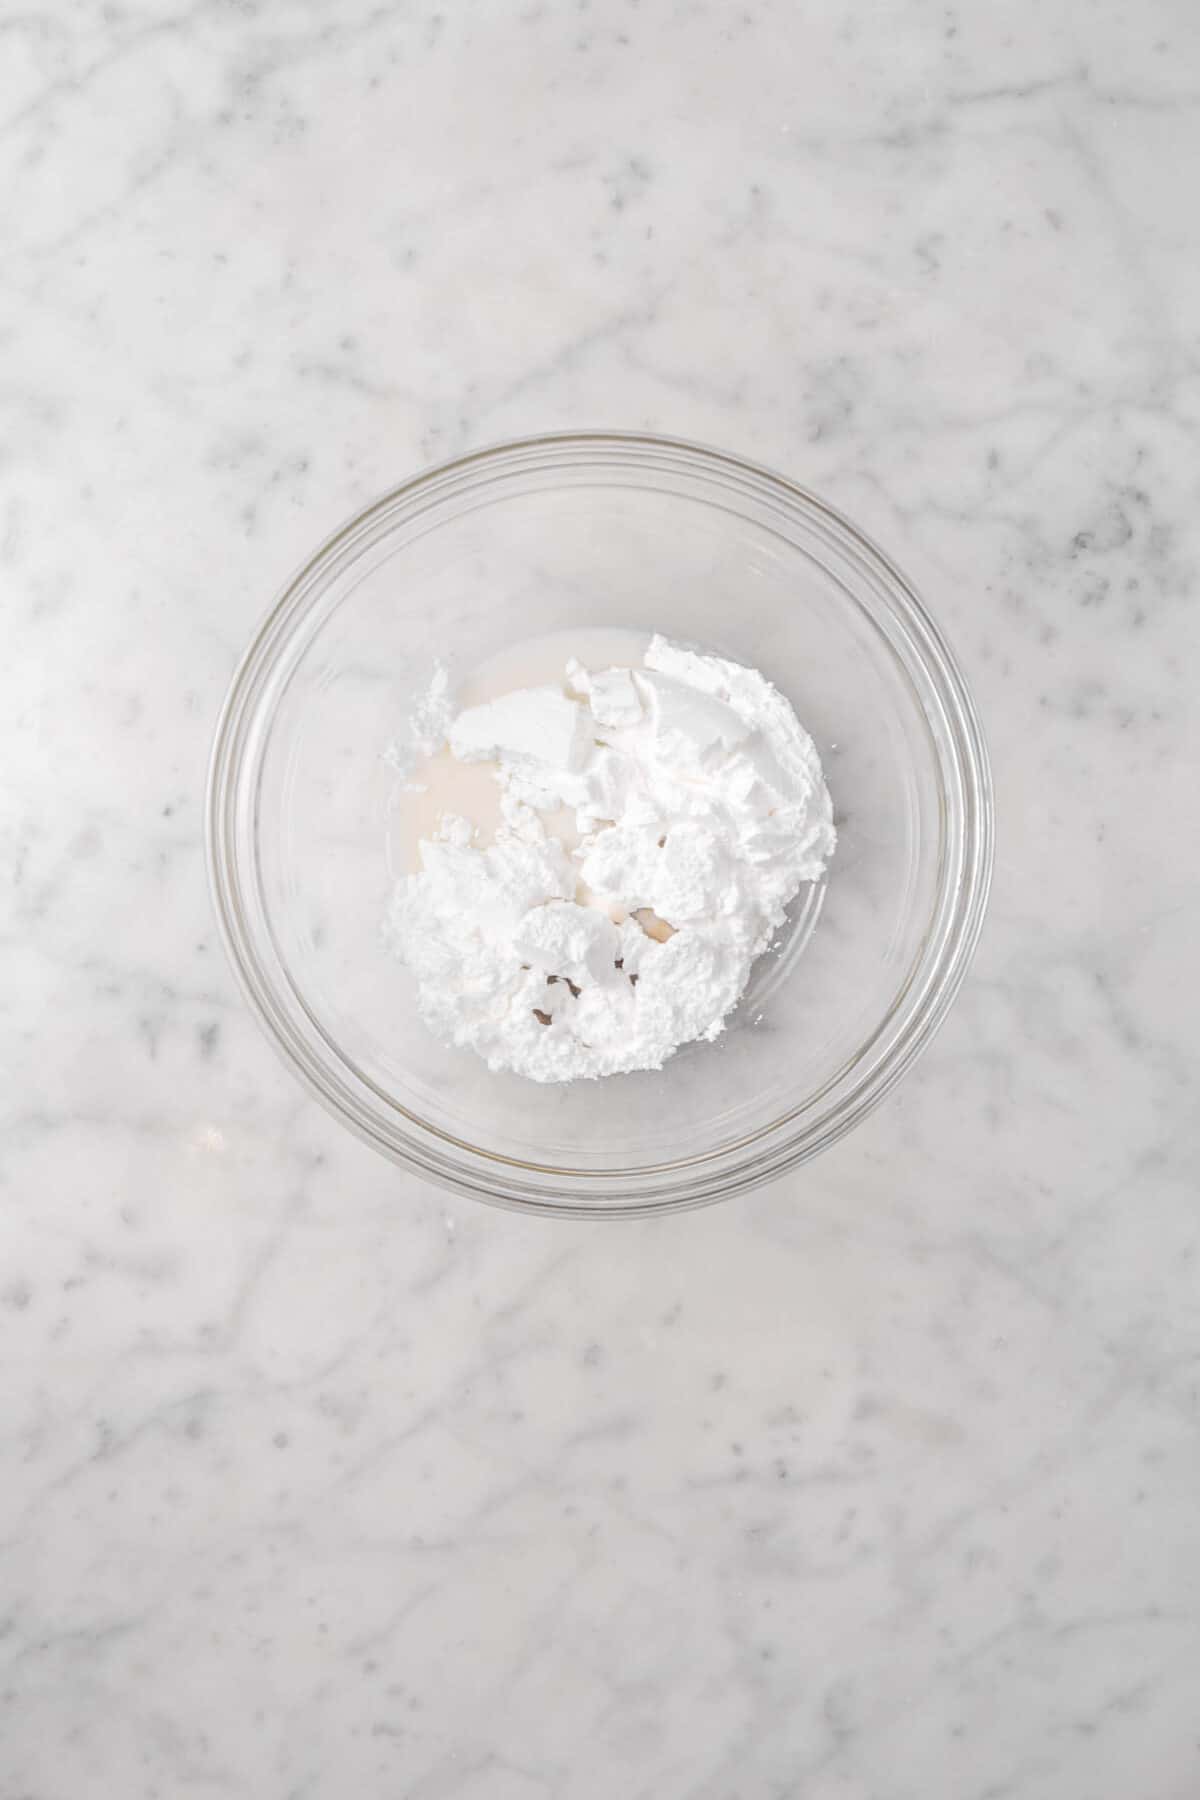 cream, vanilla, and powdered sugar in a bowl